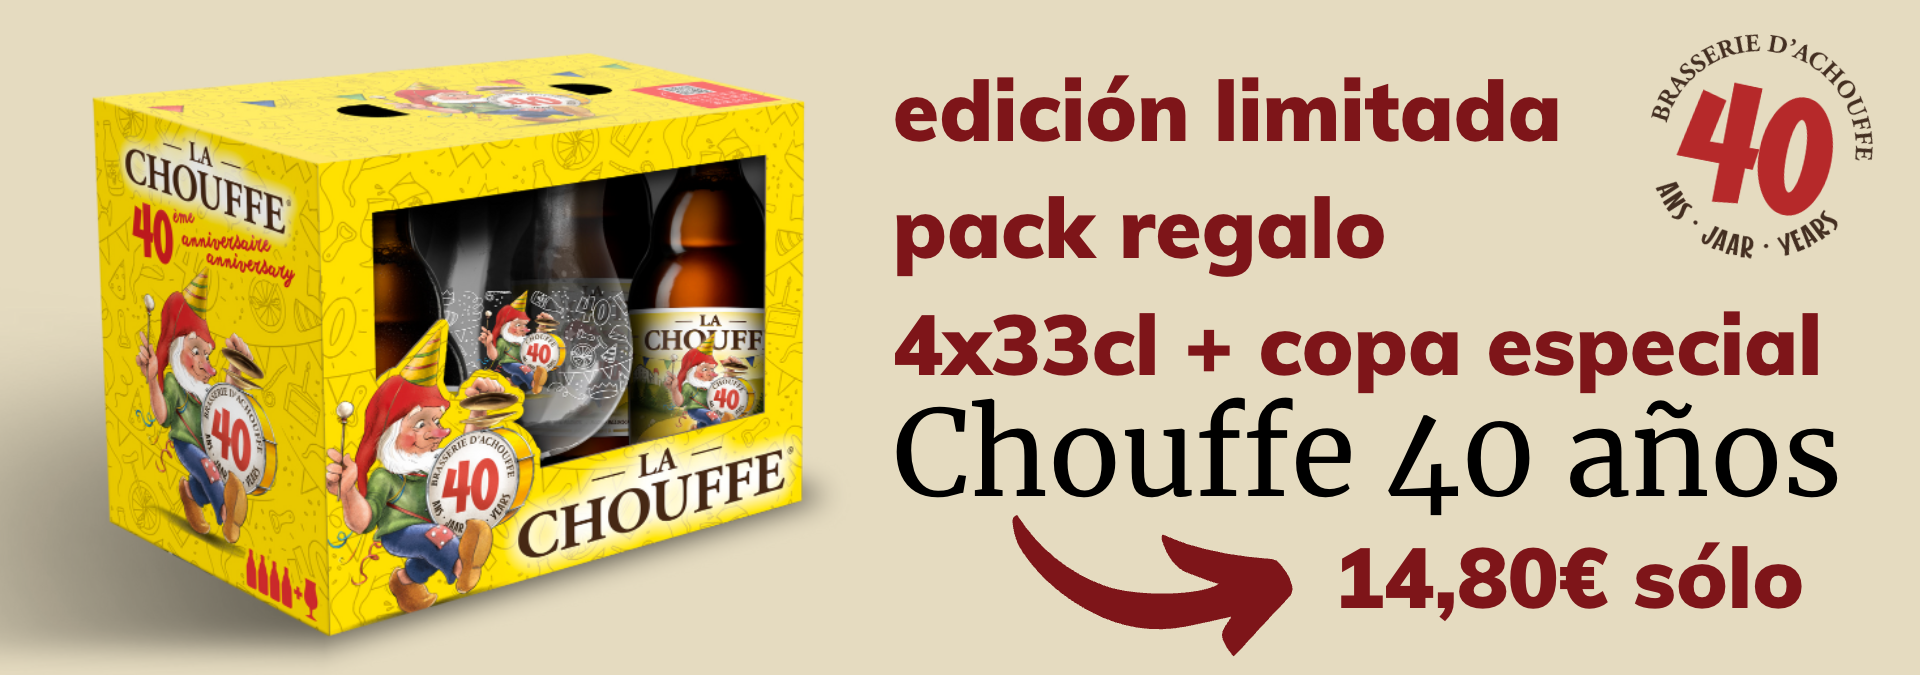 Pack regalo Chouffe 40 años